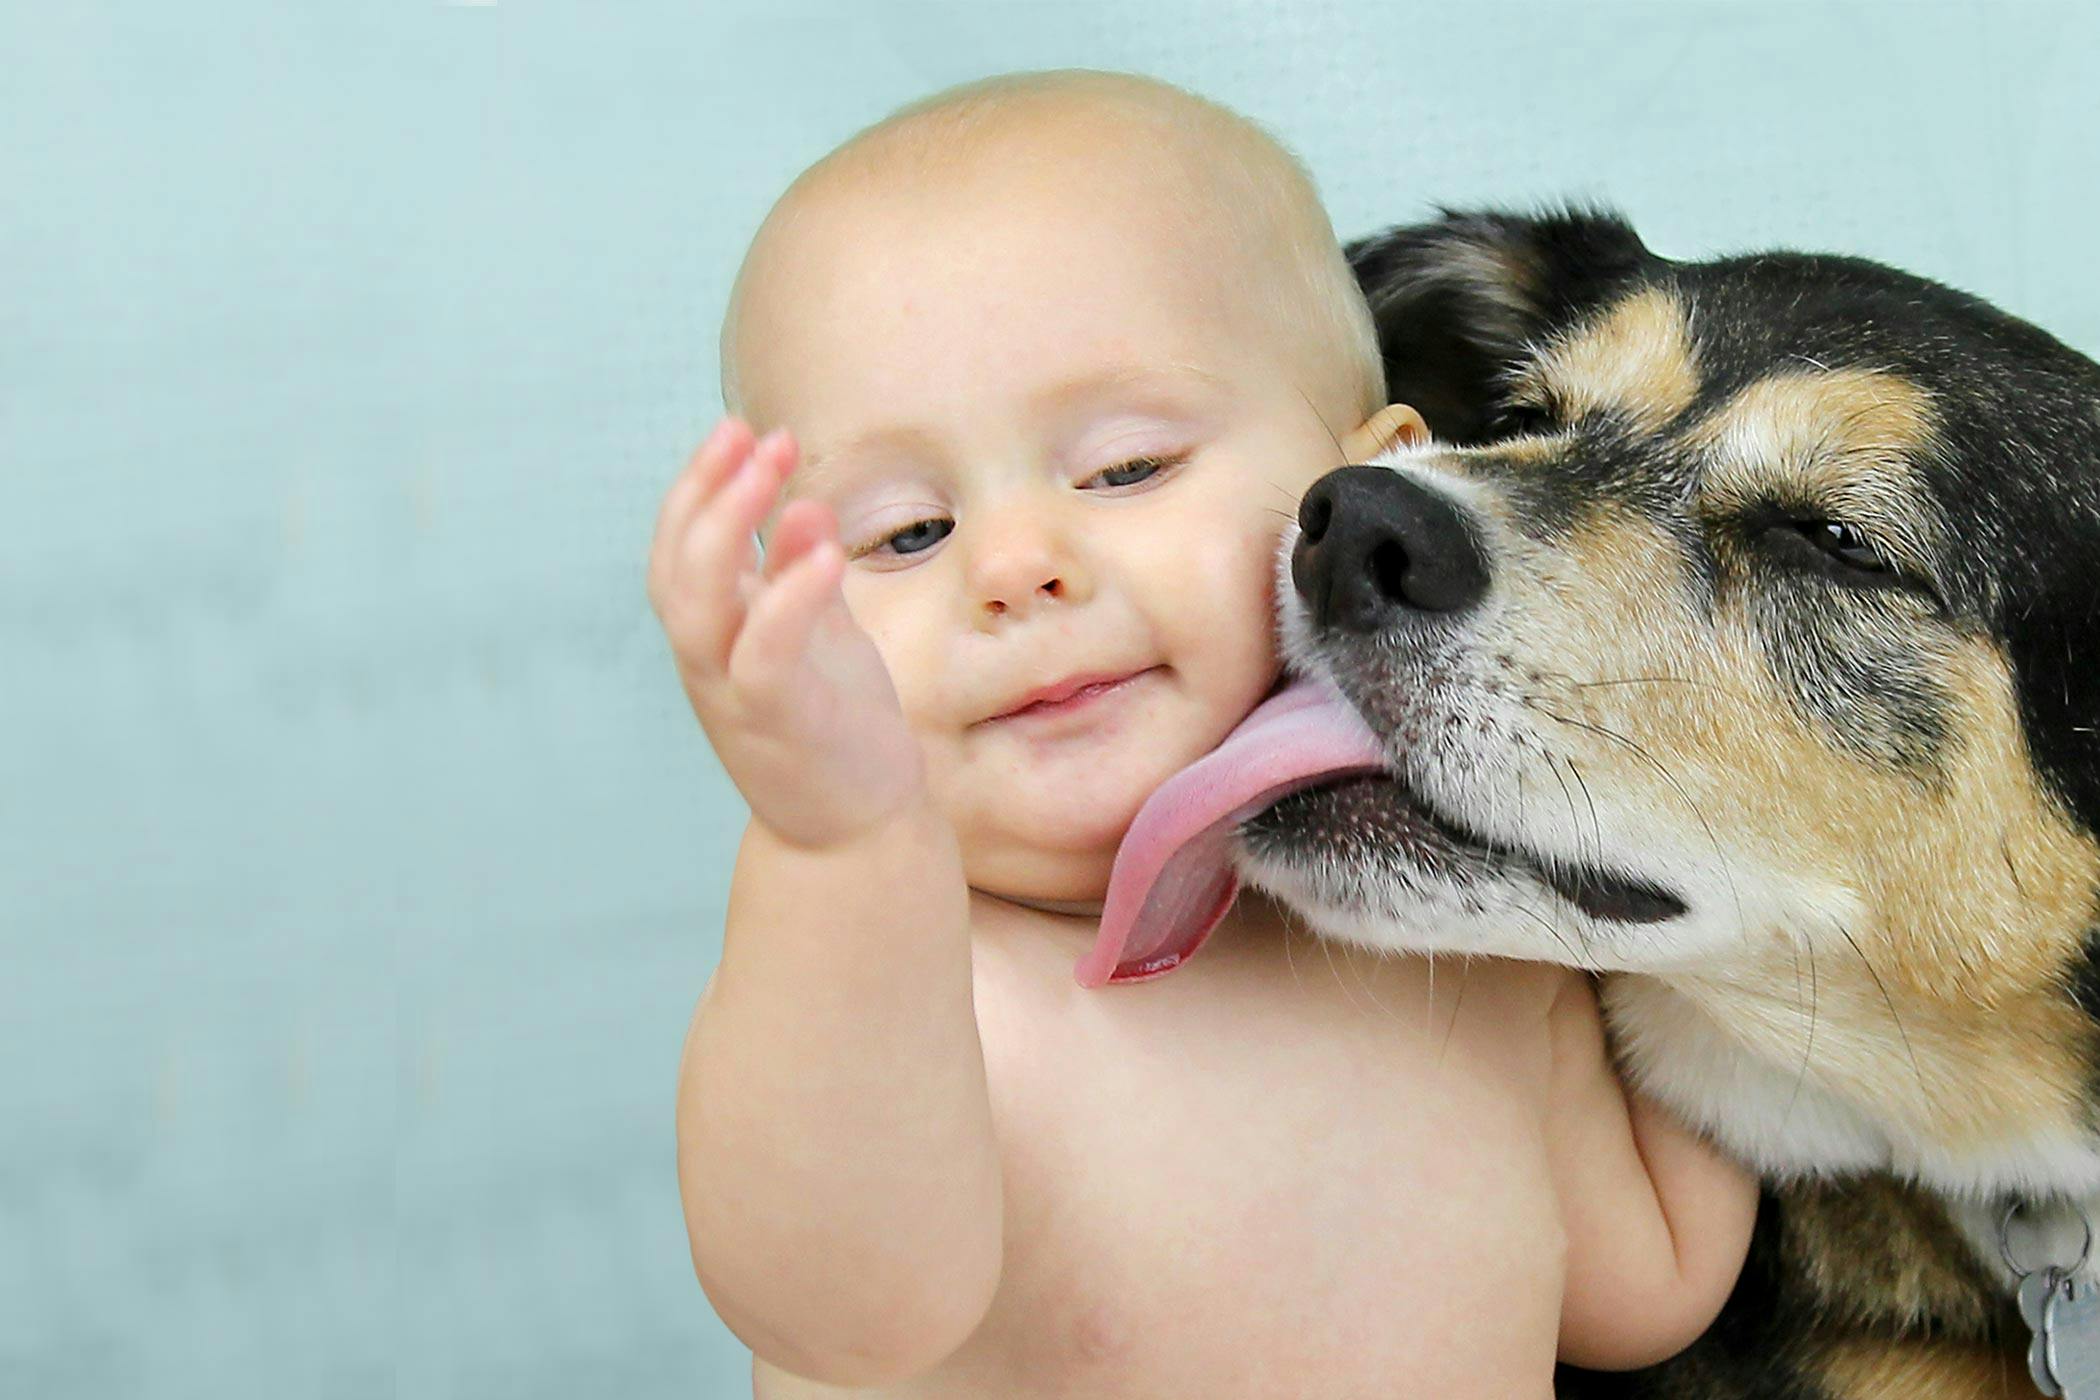 can my dog lick my newborn